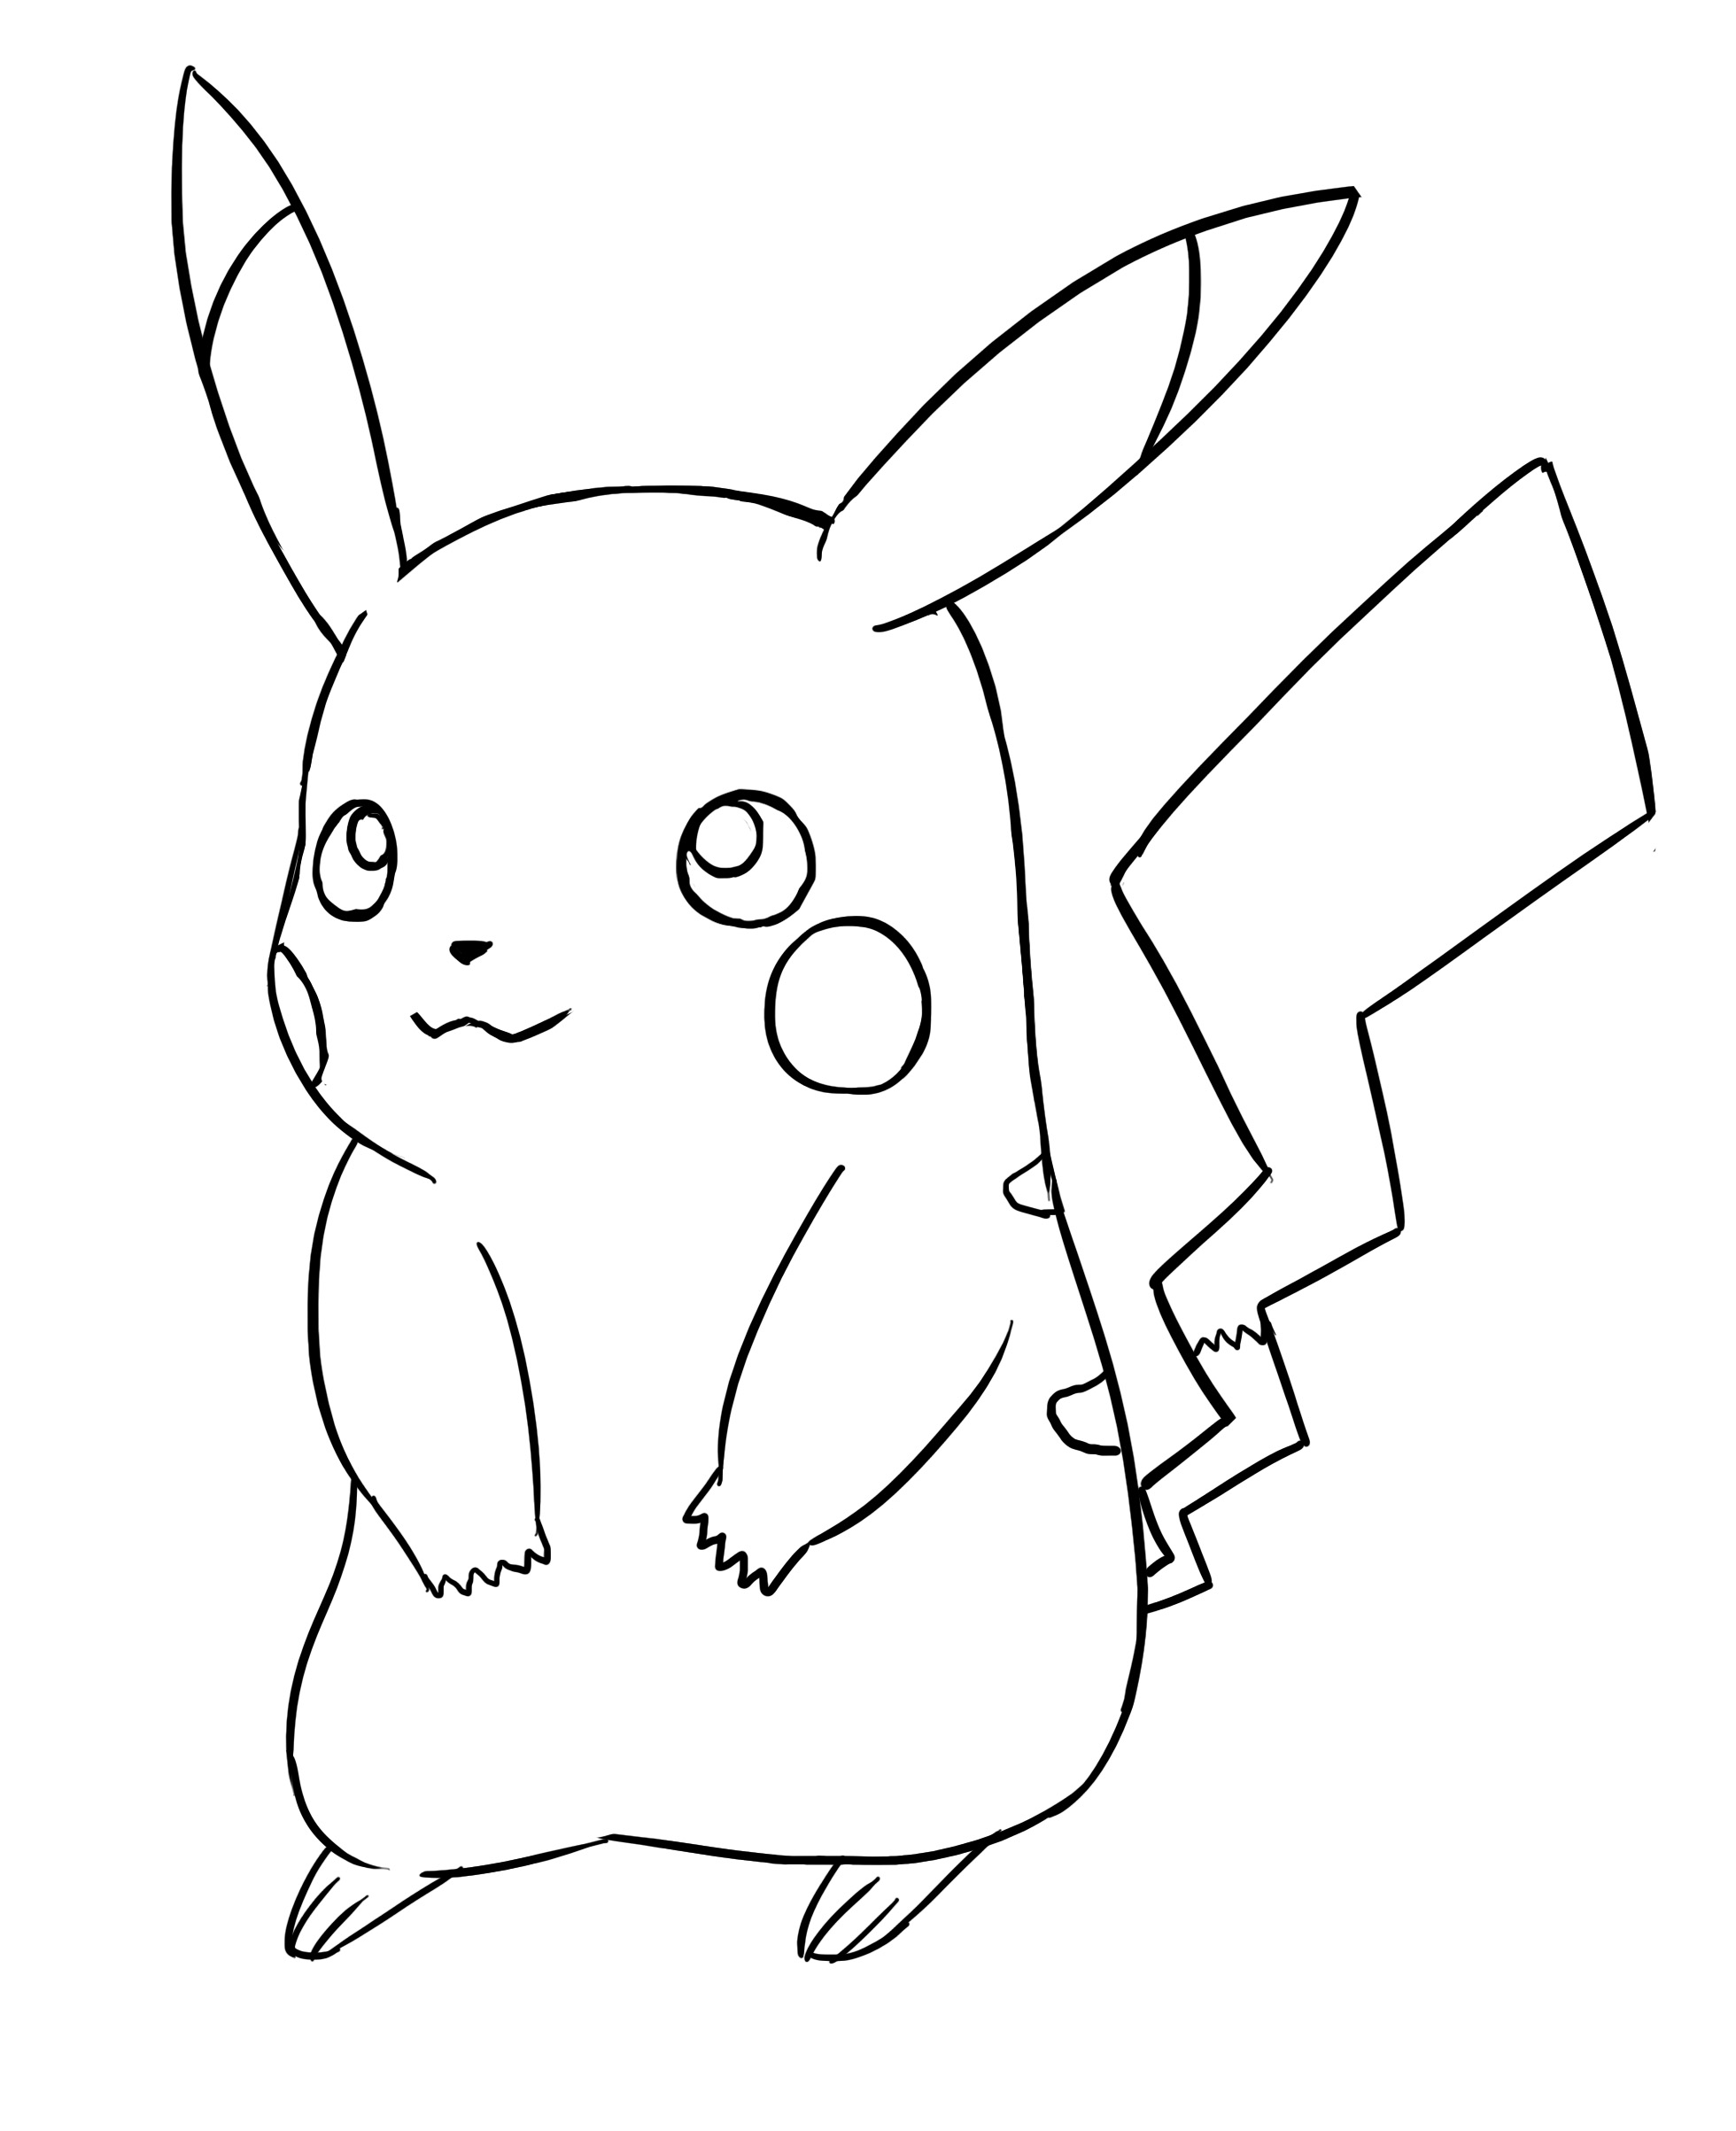 Repasser les traits du dessin de Pikachu